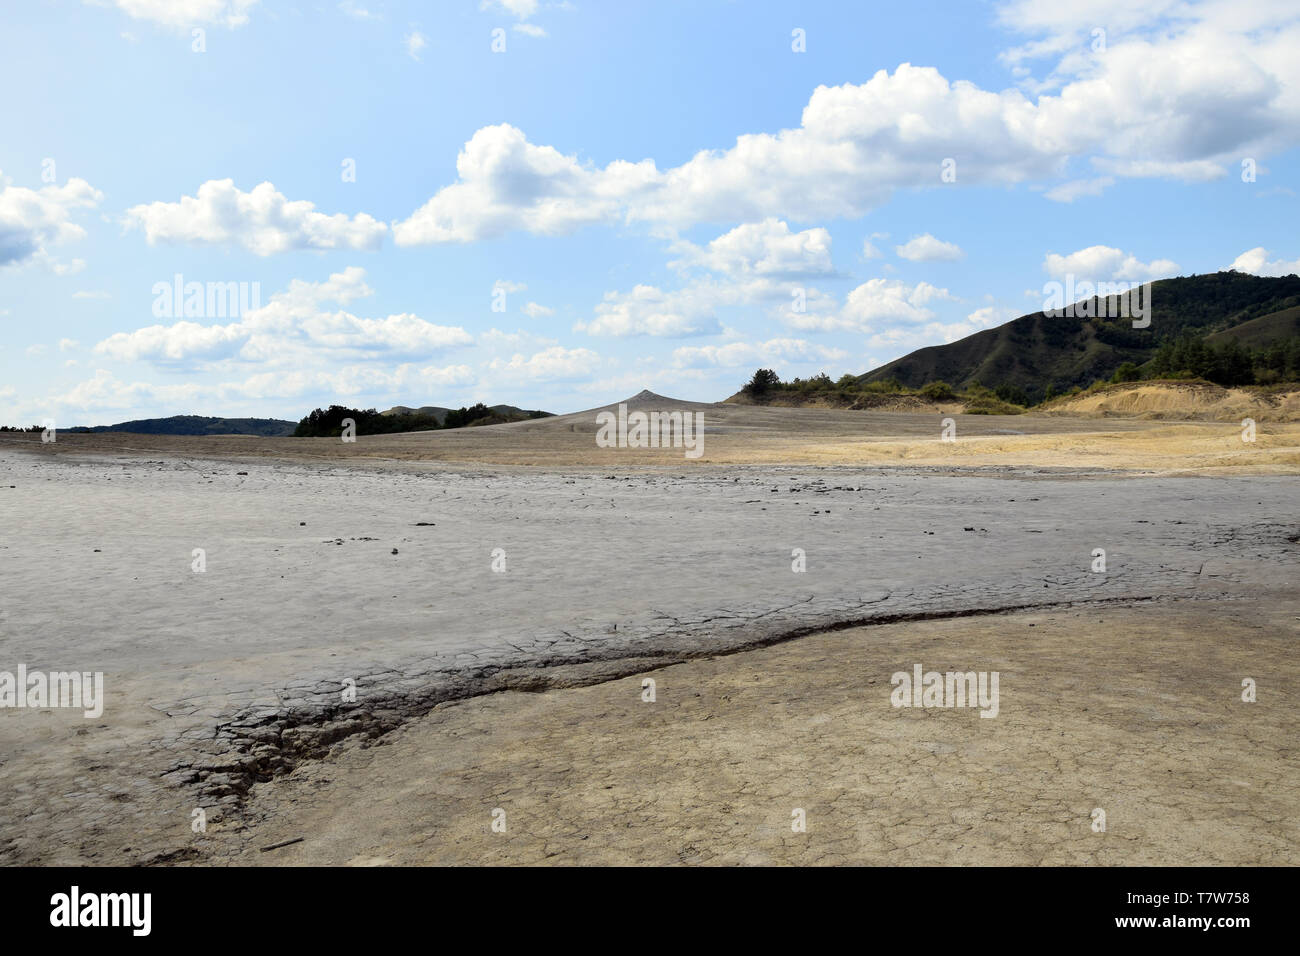 Dry, cracked earth near Mud Volcanoes (Vulcanii Noroiosi) in Berca. Buzau, Romania. Stock Photo